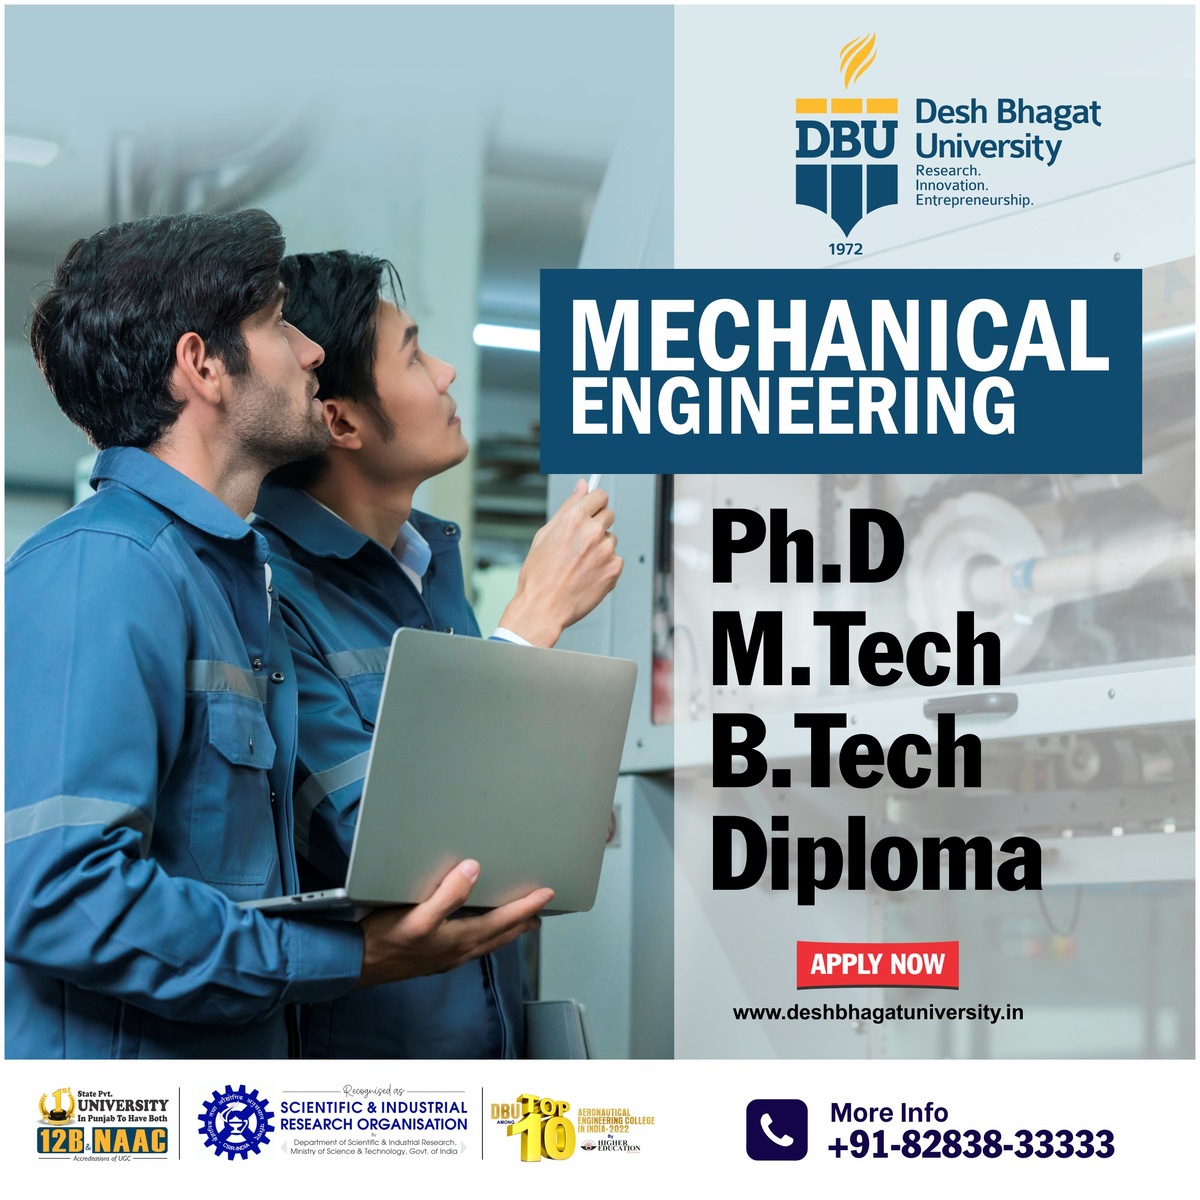 Faculty of Mechanical Engineering Ph. D M. Tech B. Tech Diploma